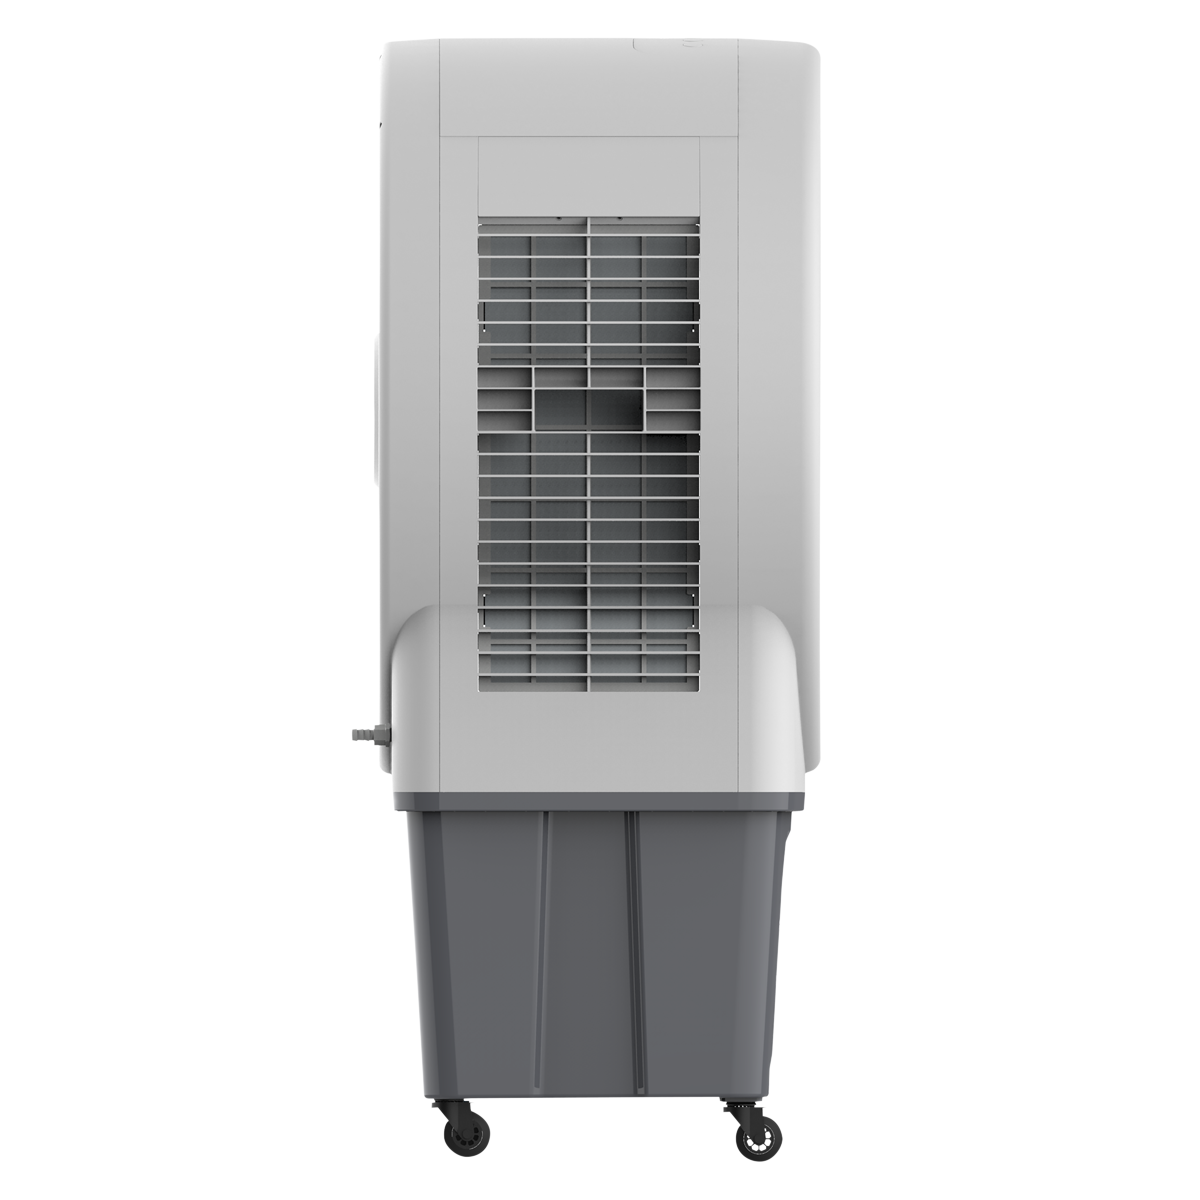 Sealey SAC100 Portable Air Cooler